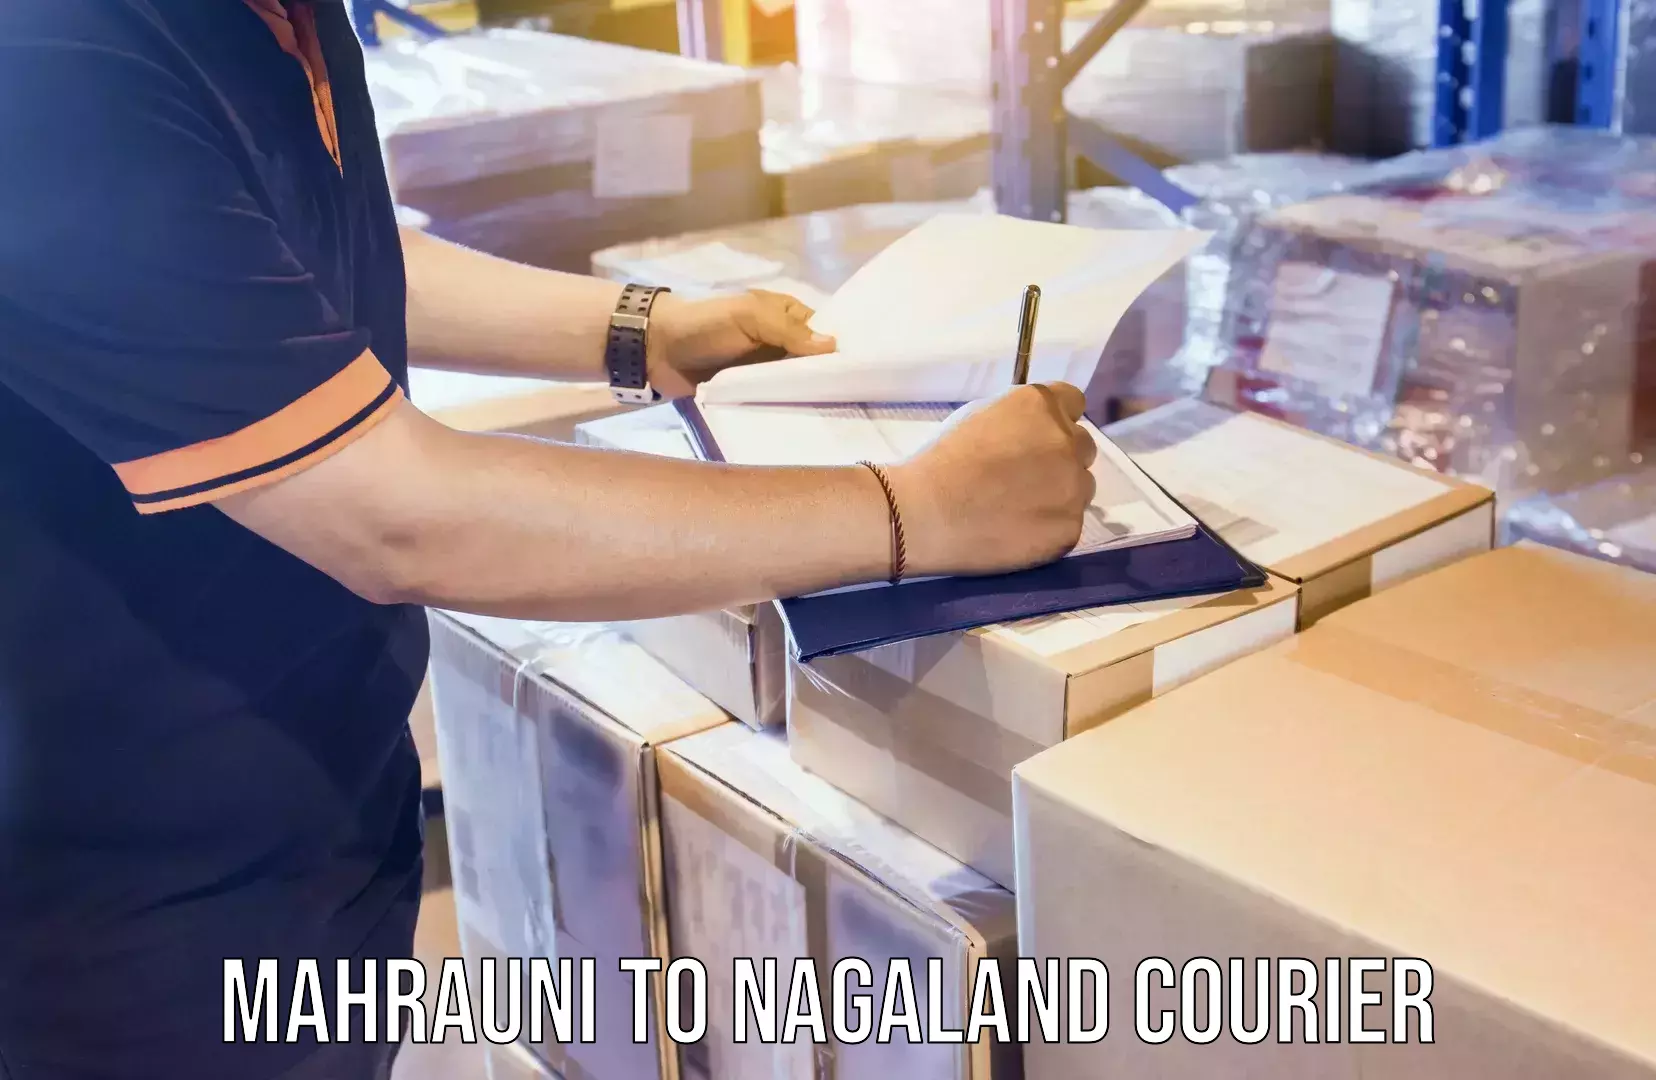 Moving and storage services Mahrauni to Nagaland